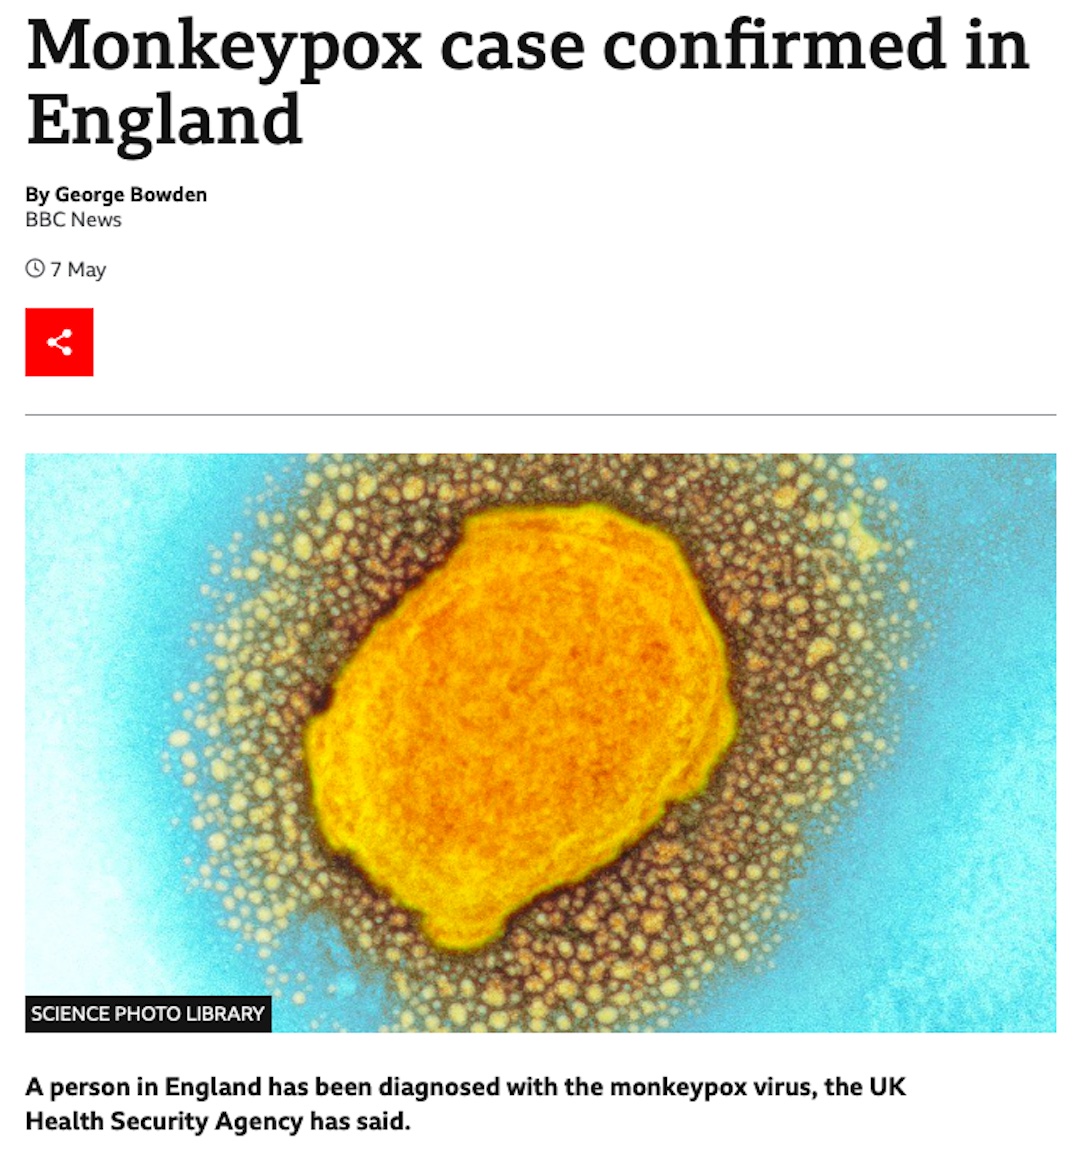 Monkeypox case confirmed in England (BBC 07.05.22)